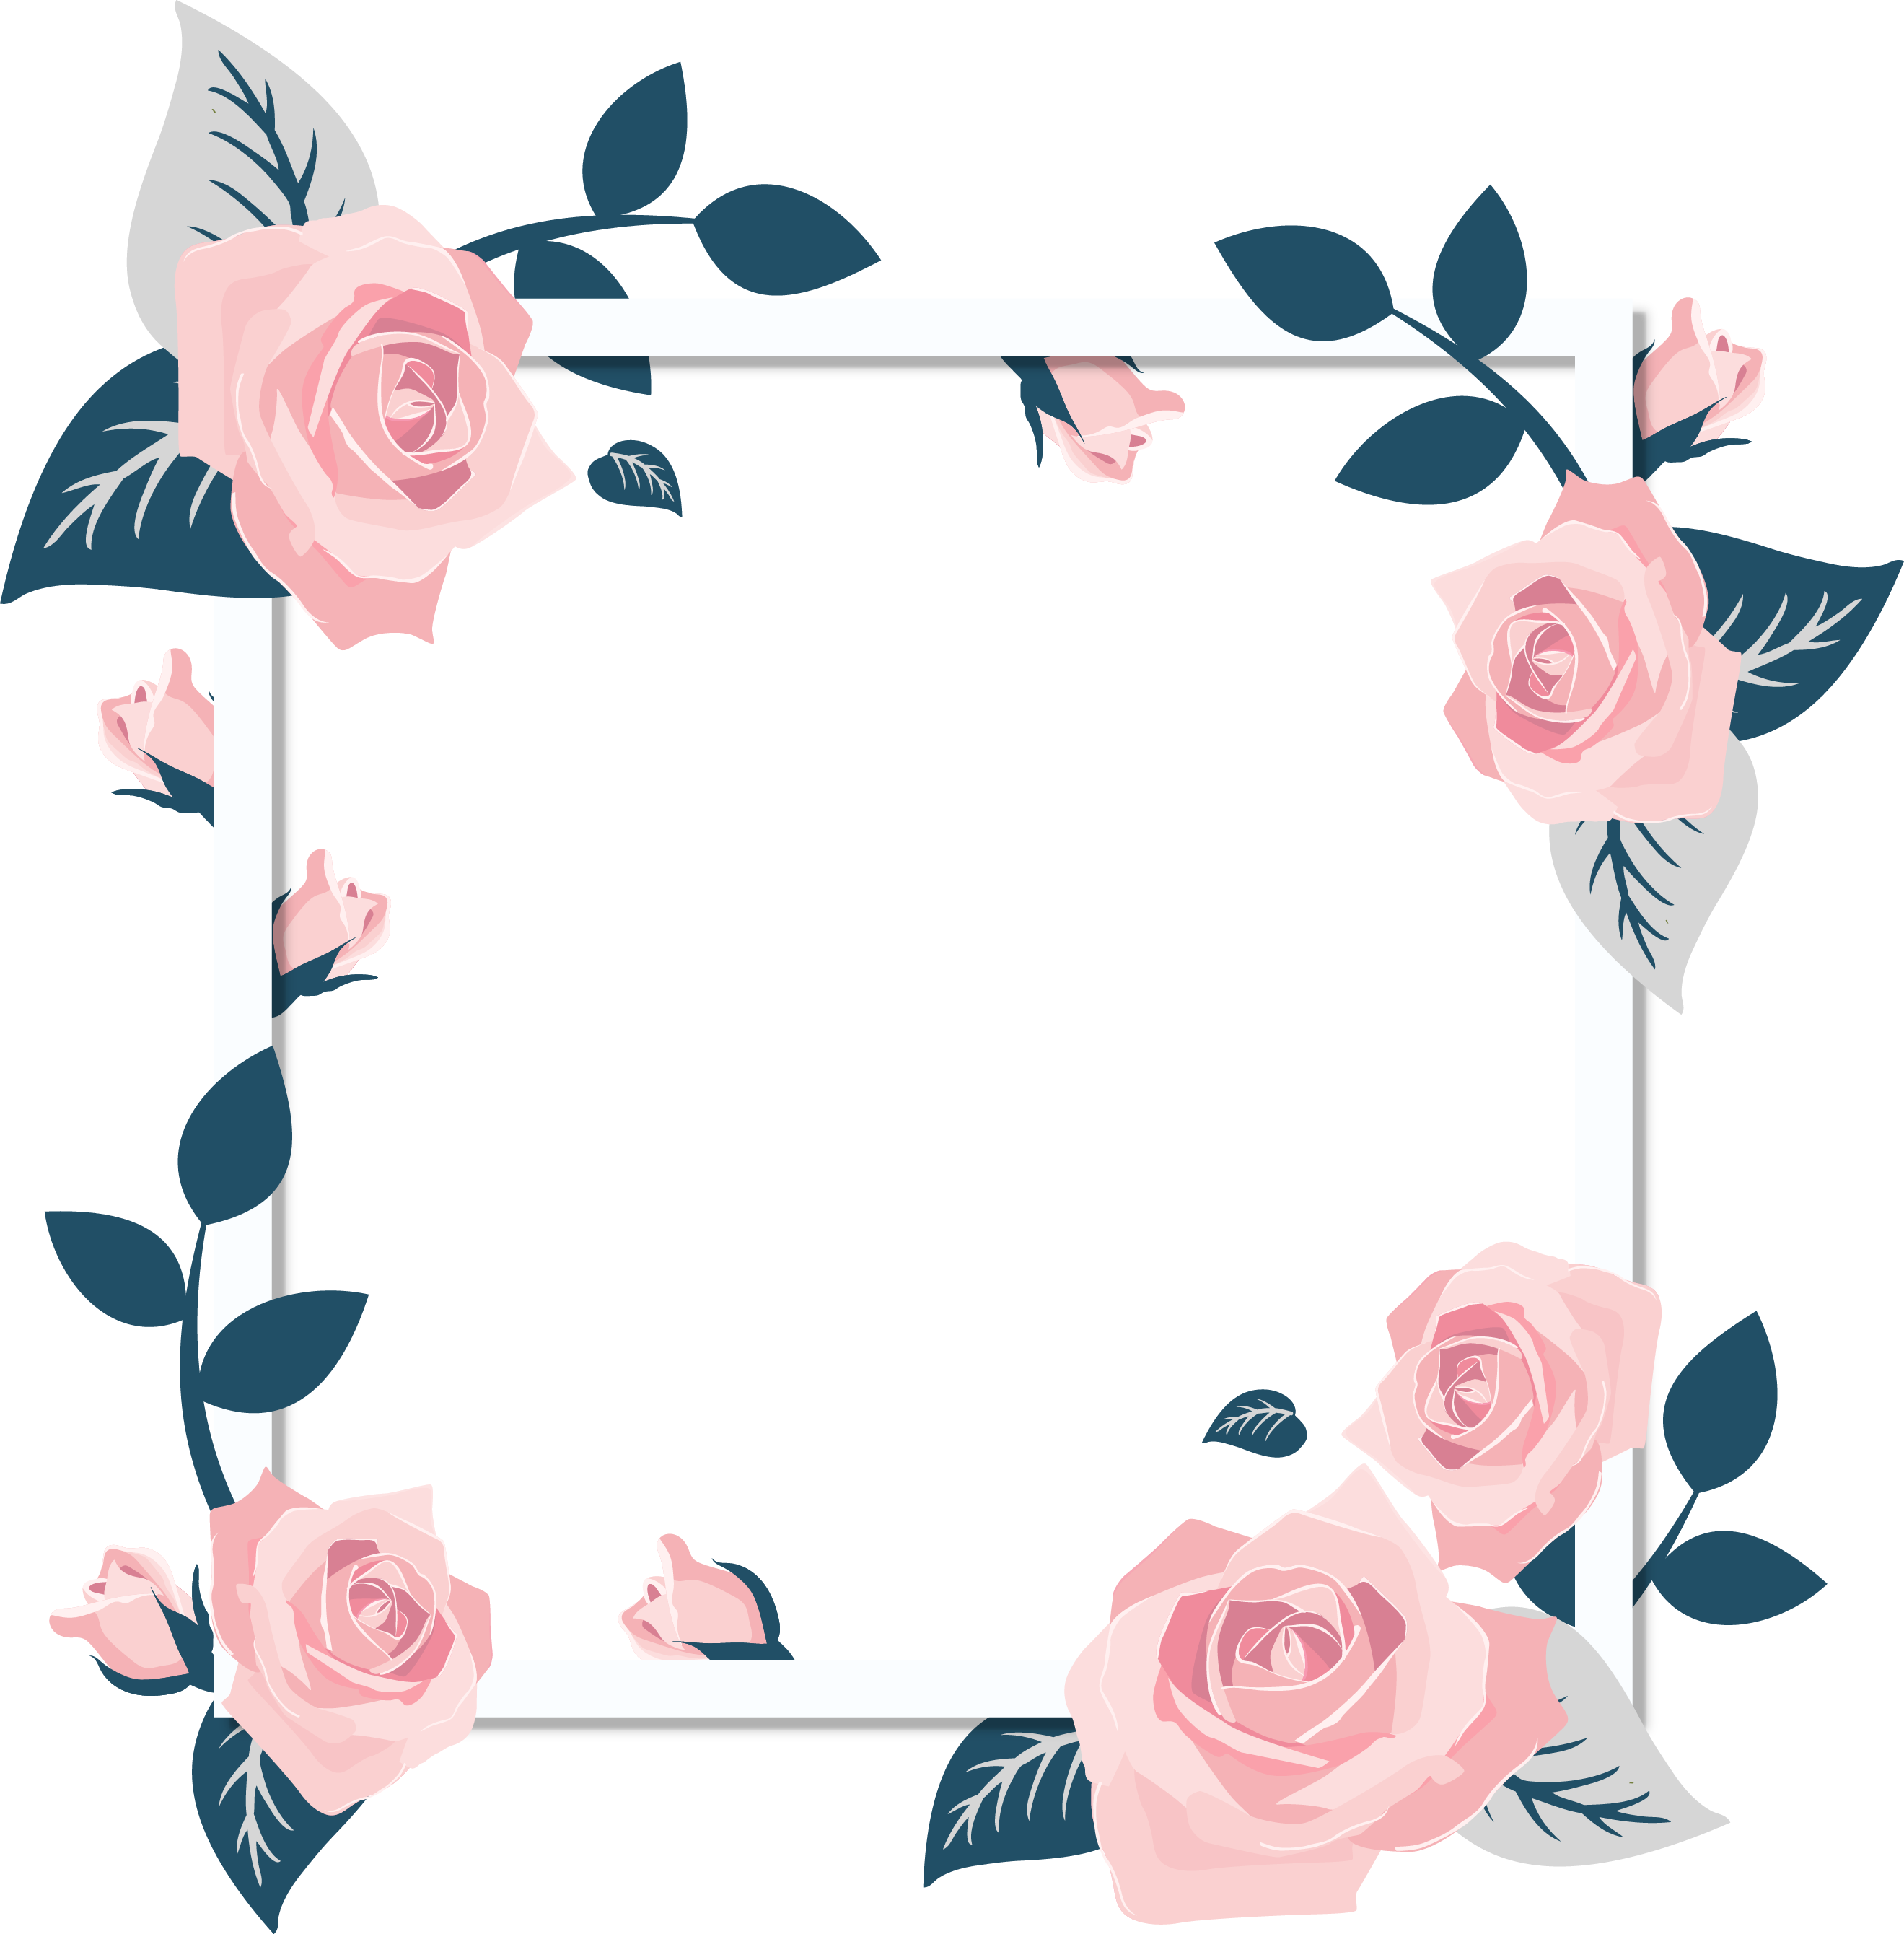 Rose frame png. Images a flower that